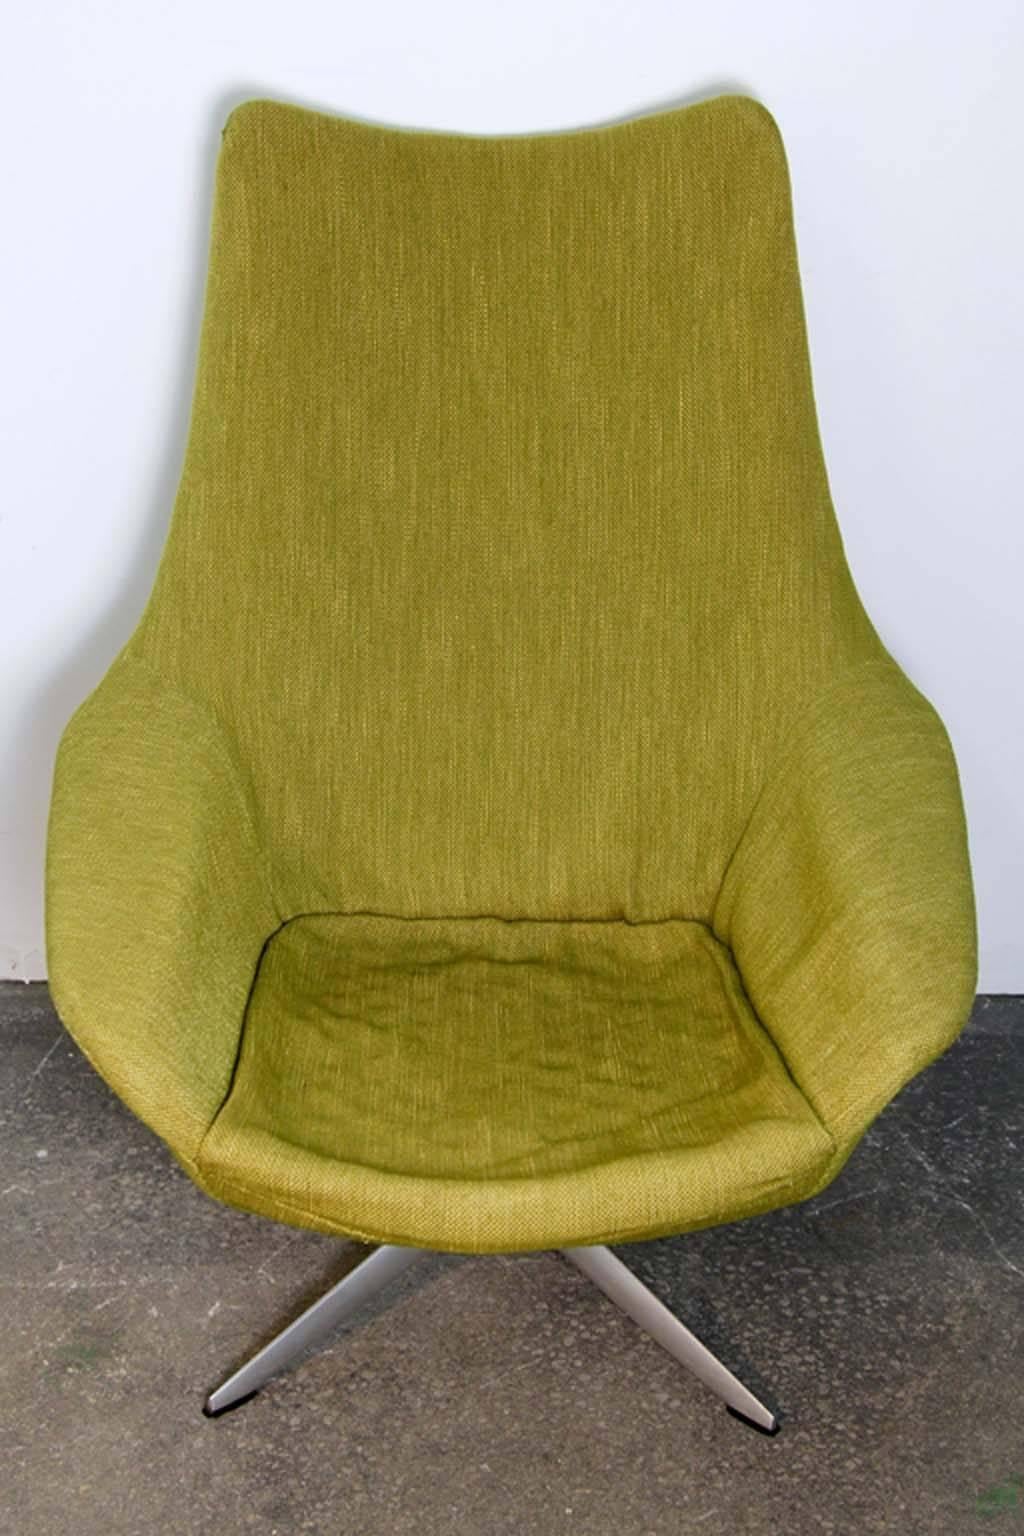 Early Saarinen style with Peridot upholstery swivel lounge chair.